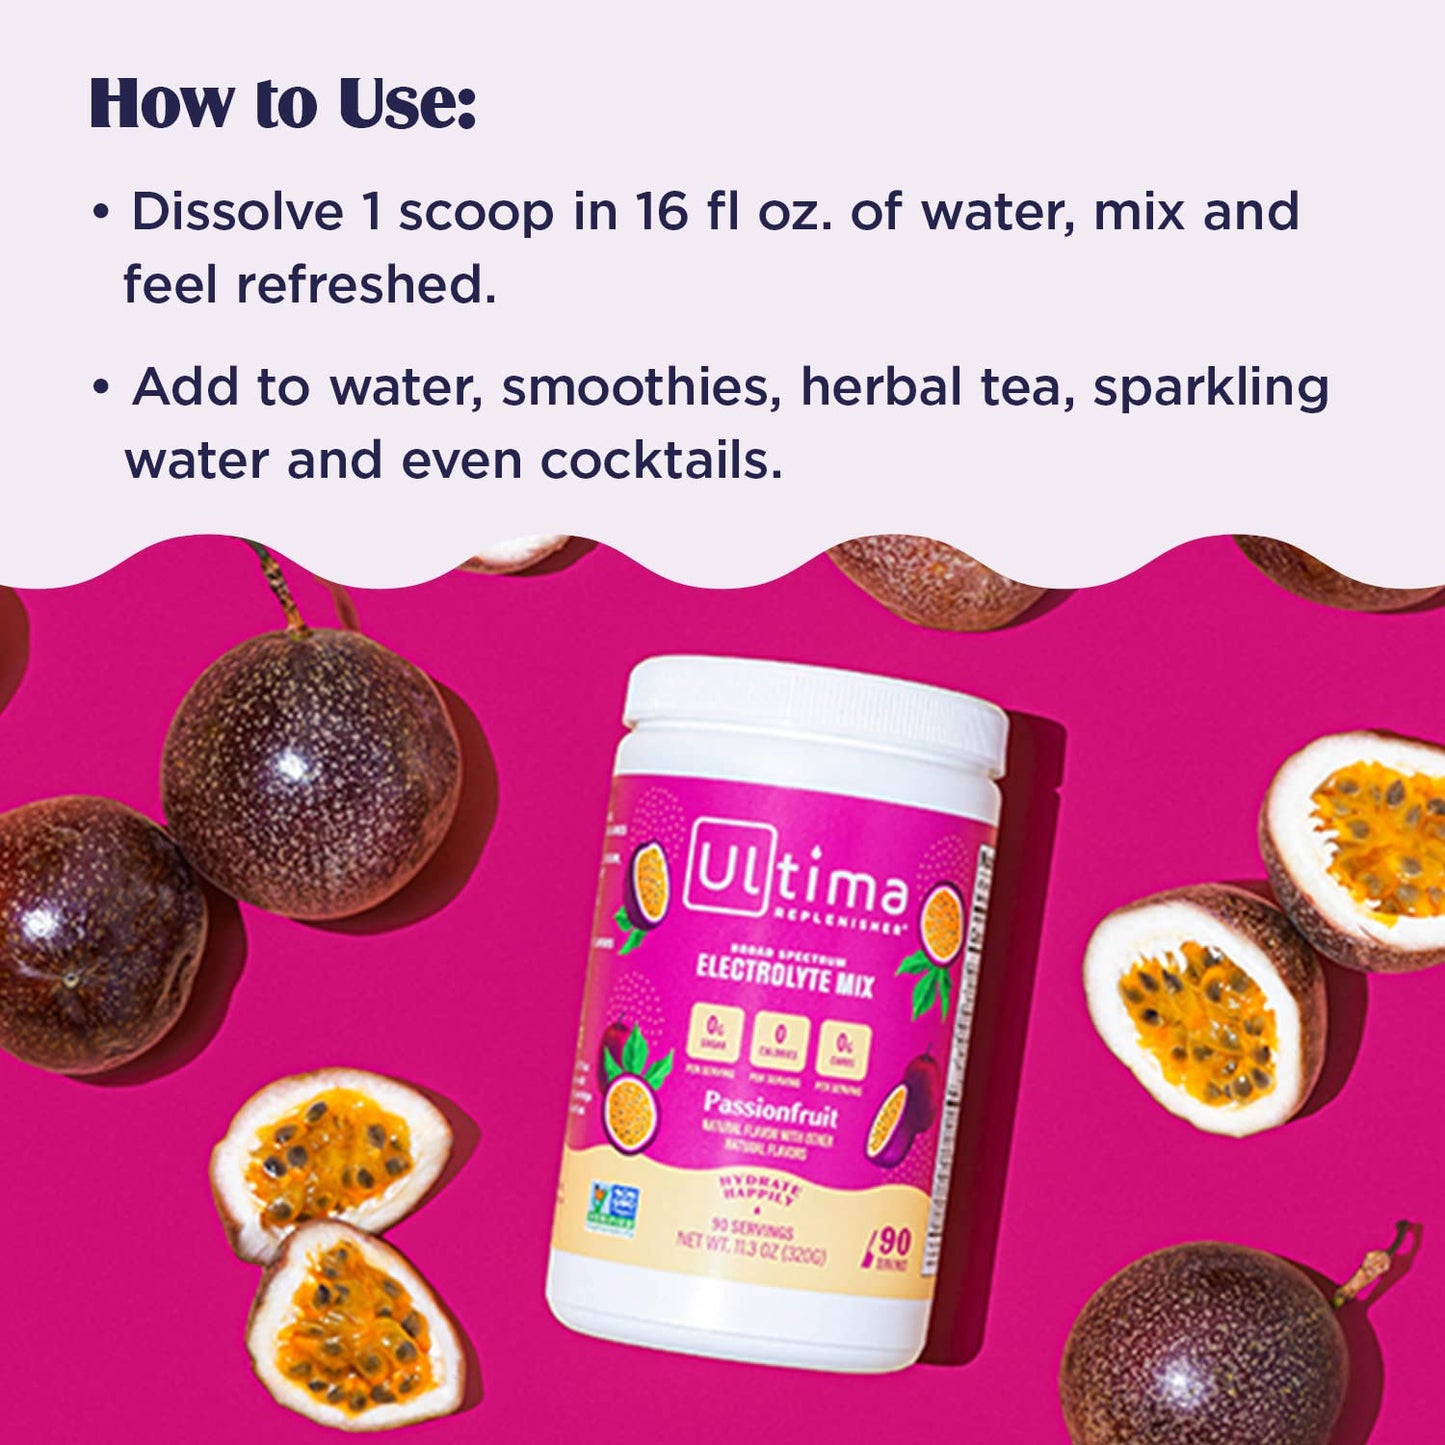 Ultima Replenisher Hydration Electrolyte Powder- 90 Servings- Keto & Sugar Free- Feel Replenished, Revitalized- Naturally Sweetened- Non- GMO & Vegan Electrolyte Drink Mix- Pink Lemonade